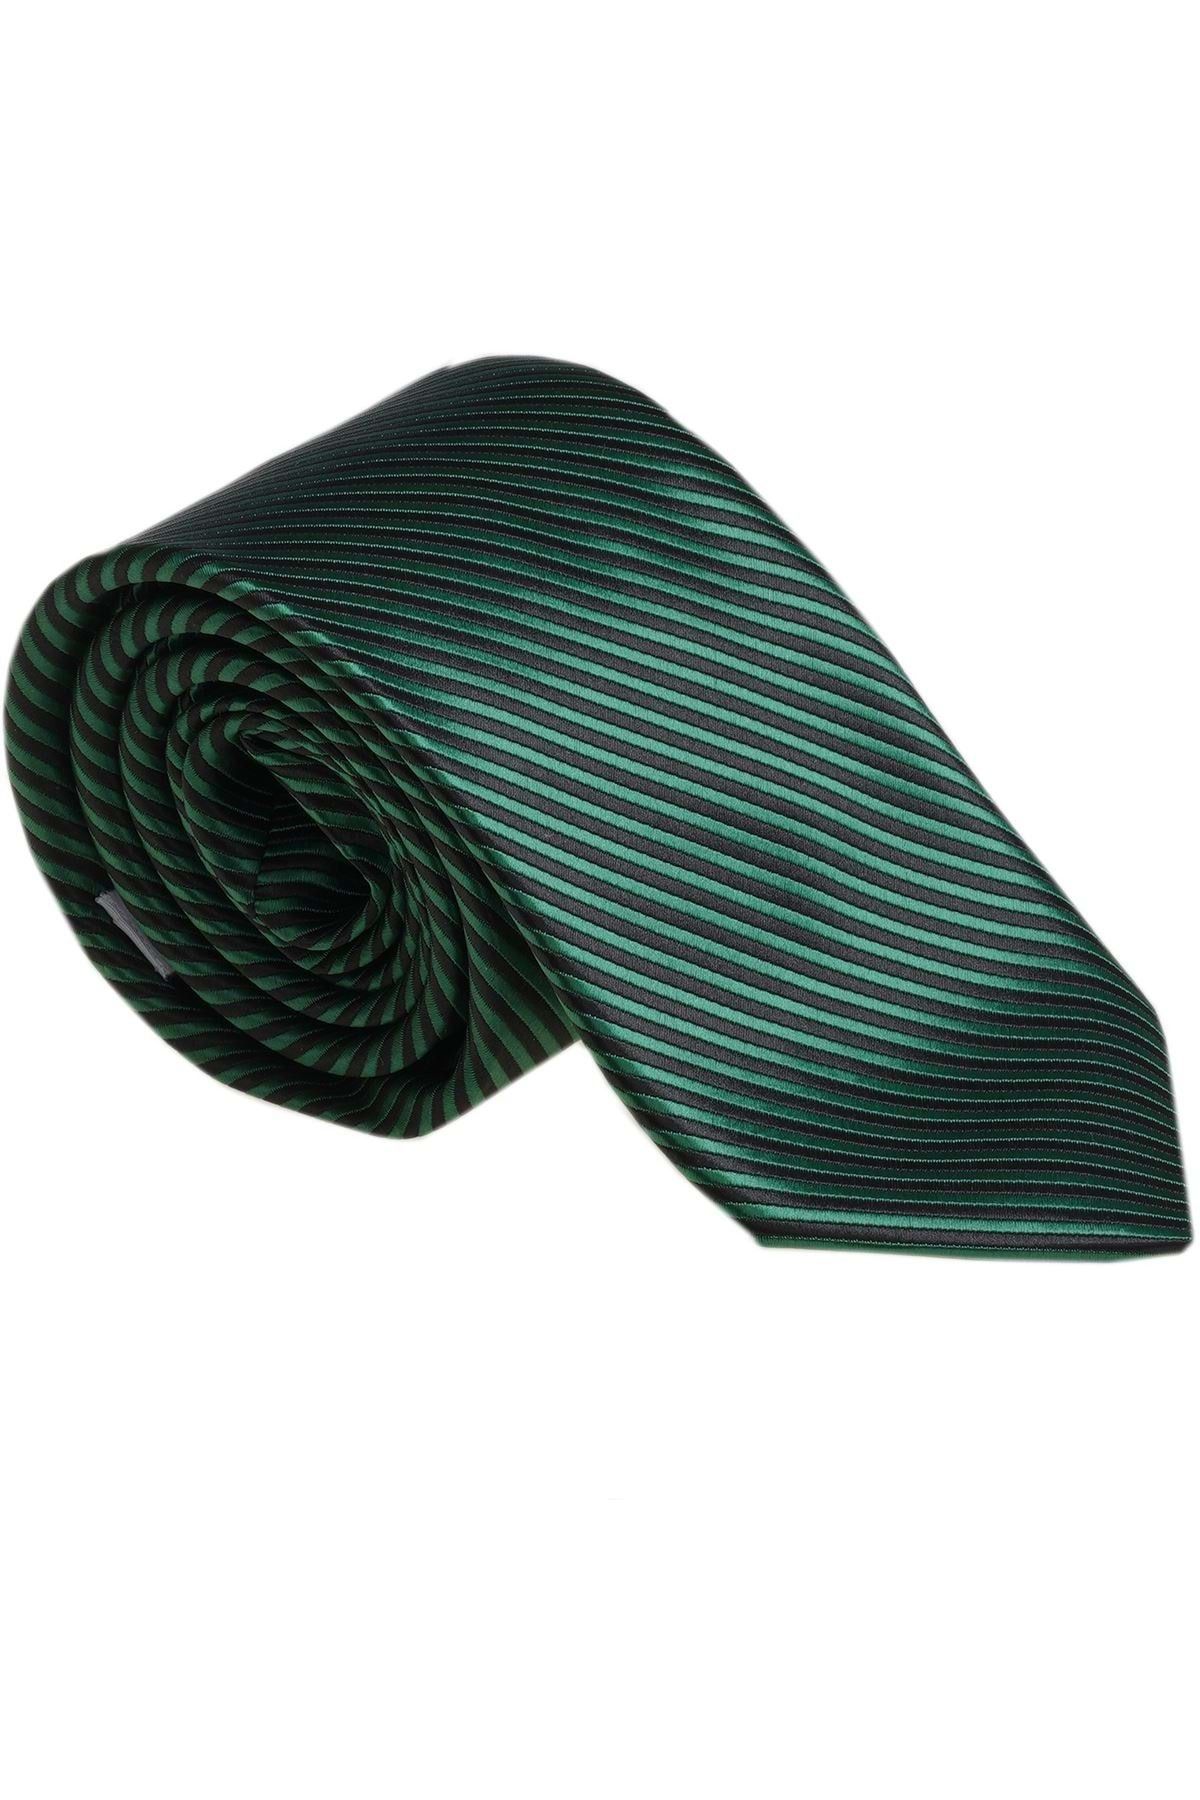 Exve Exclusive Yeşil Siyah Çizgili Kravat